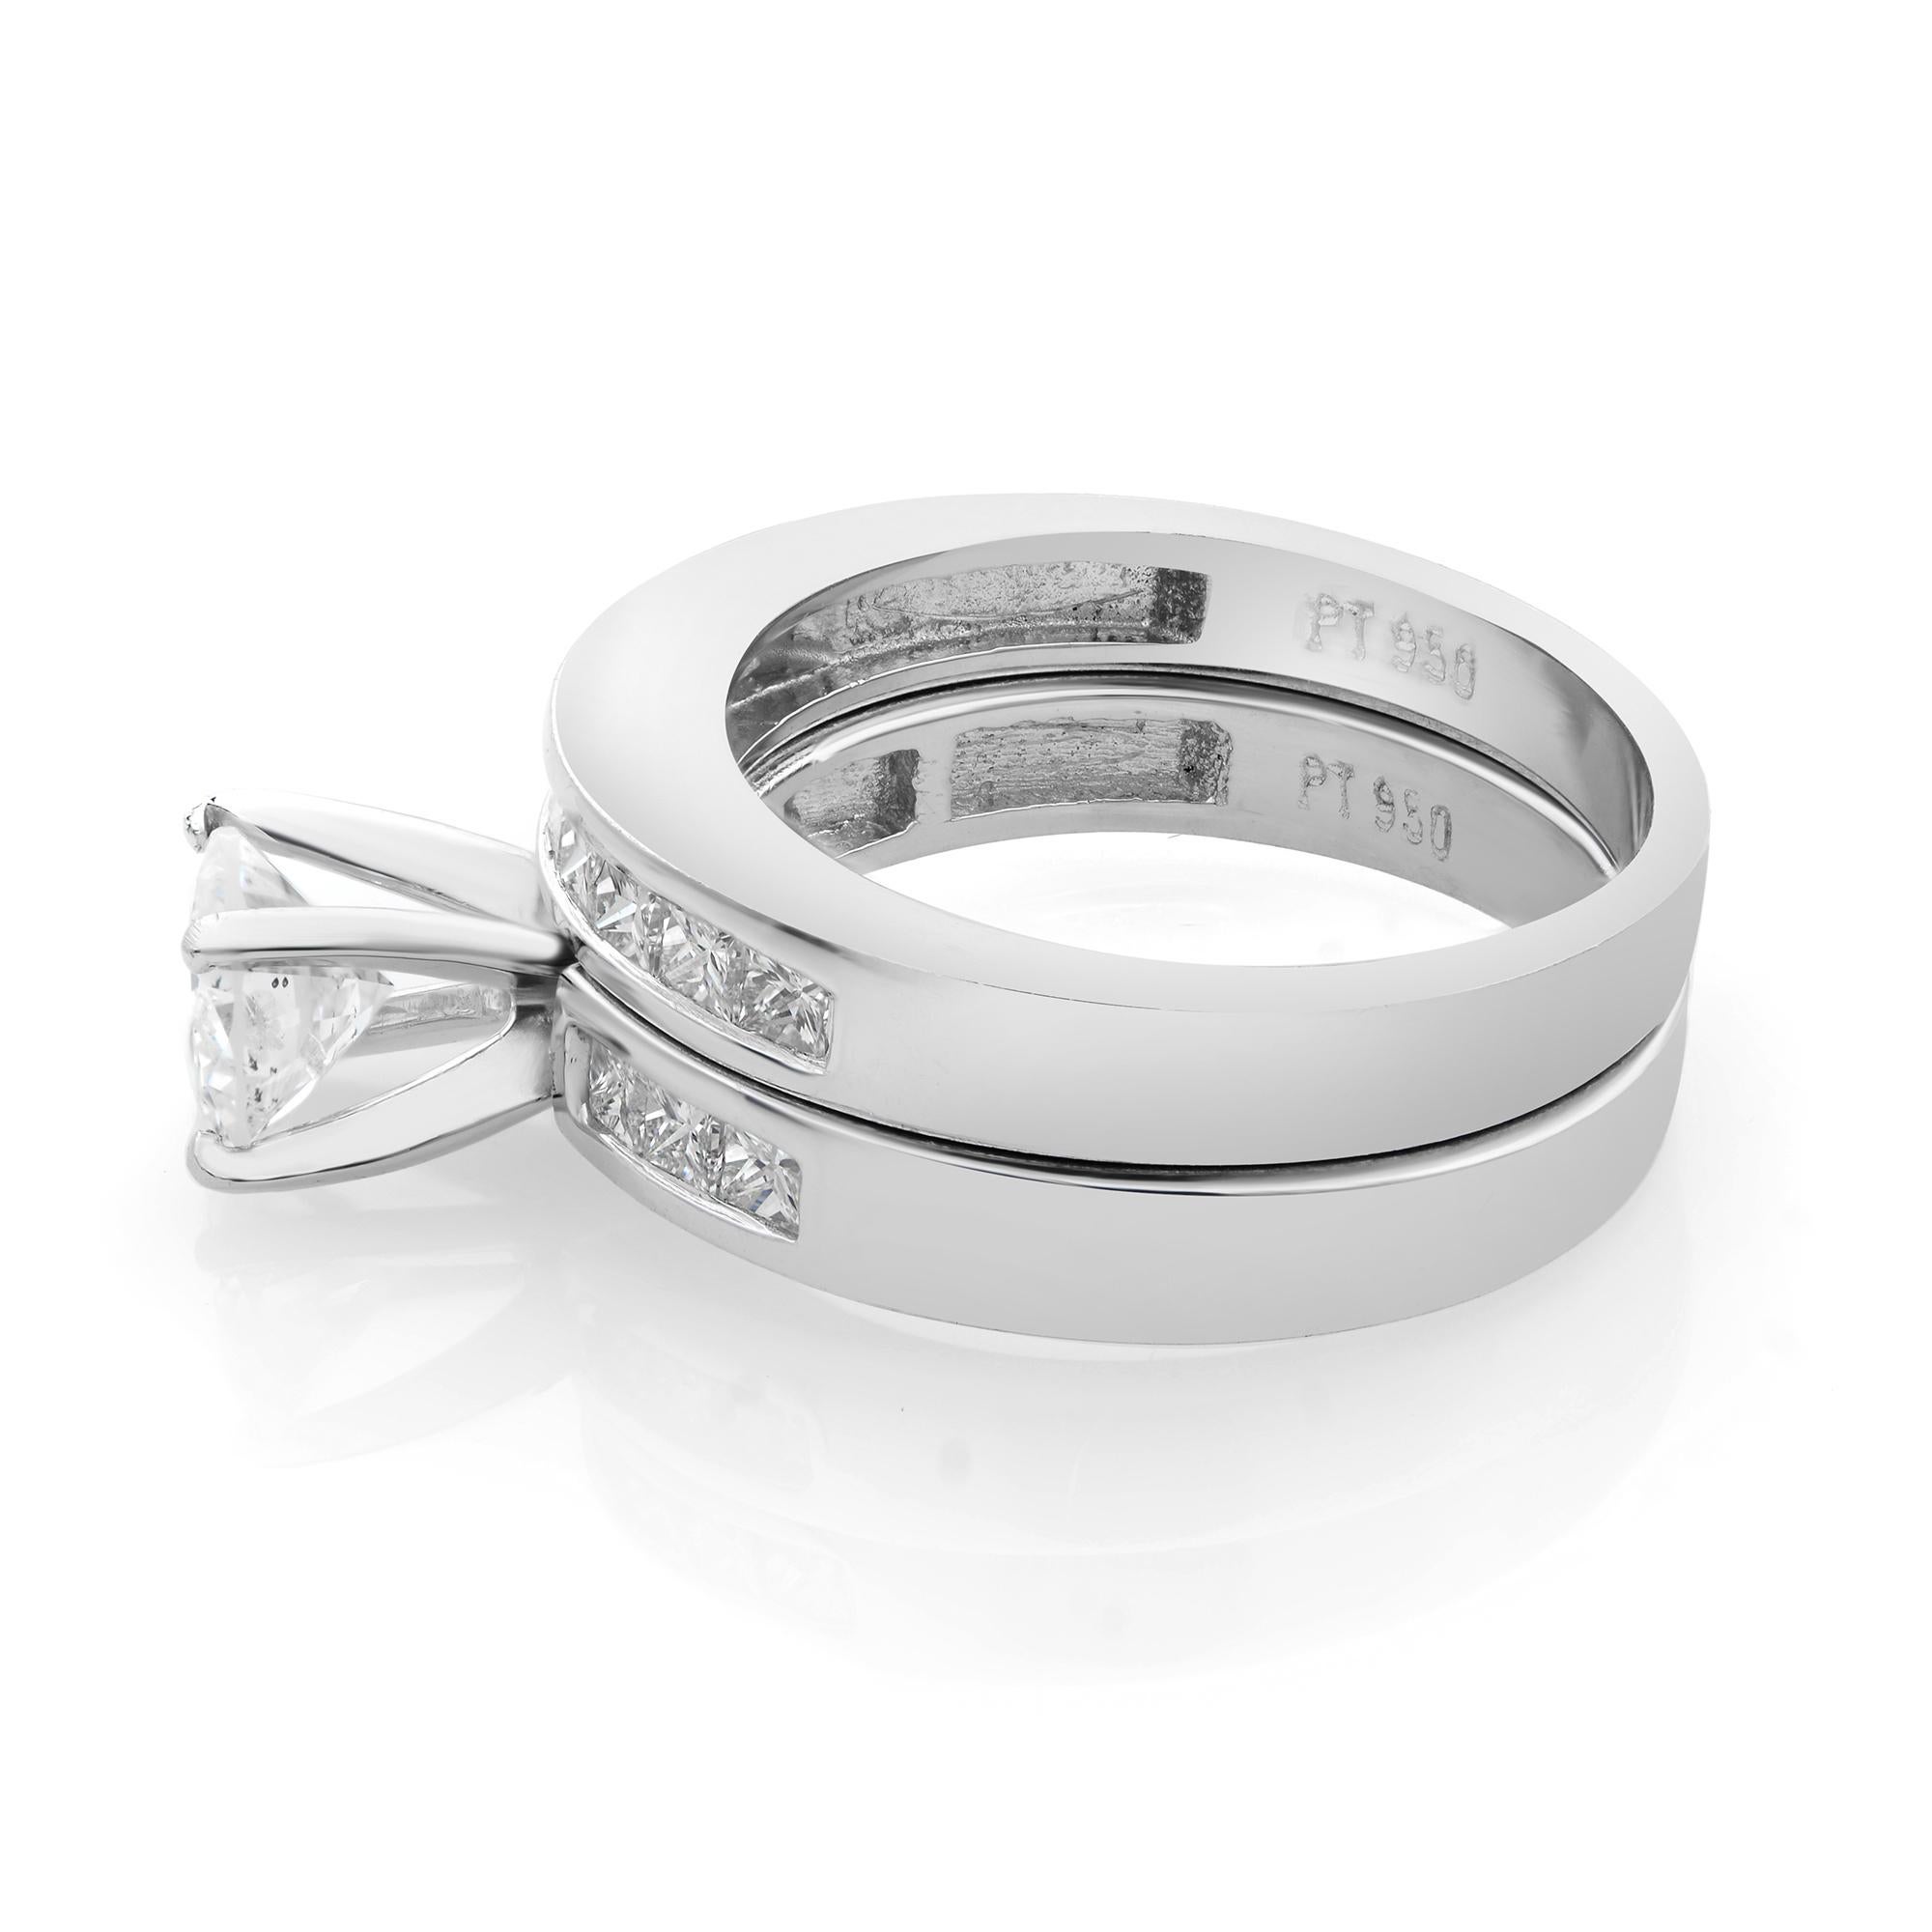 Round Cut Rachel Koen 1.80Cttw Diamond Engagement Ring Set 14K White Gold Size 5.5